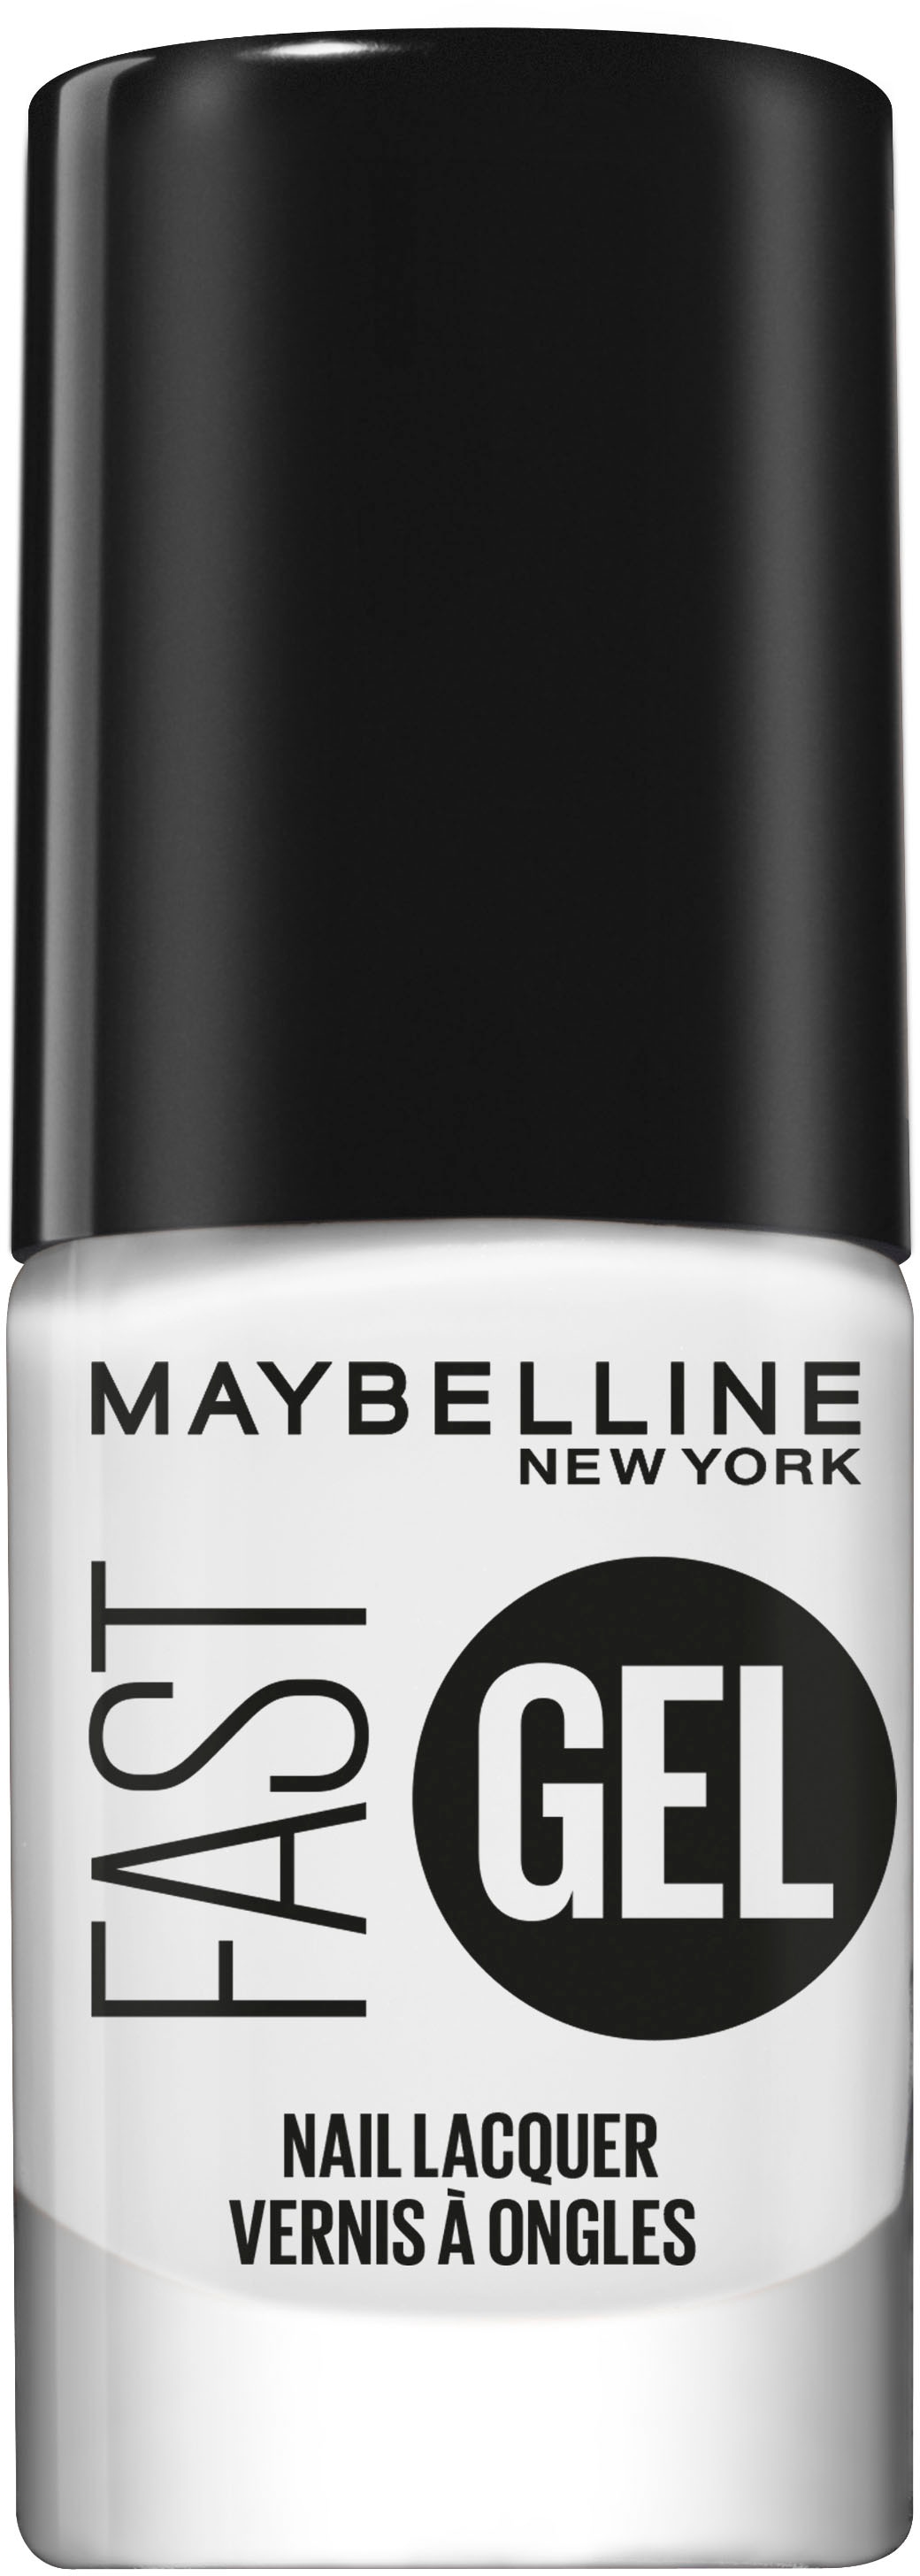 MAYBELLINE NEW YORK Kosmetik-Set »Fast Gel Nagellack Set« online bestellen